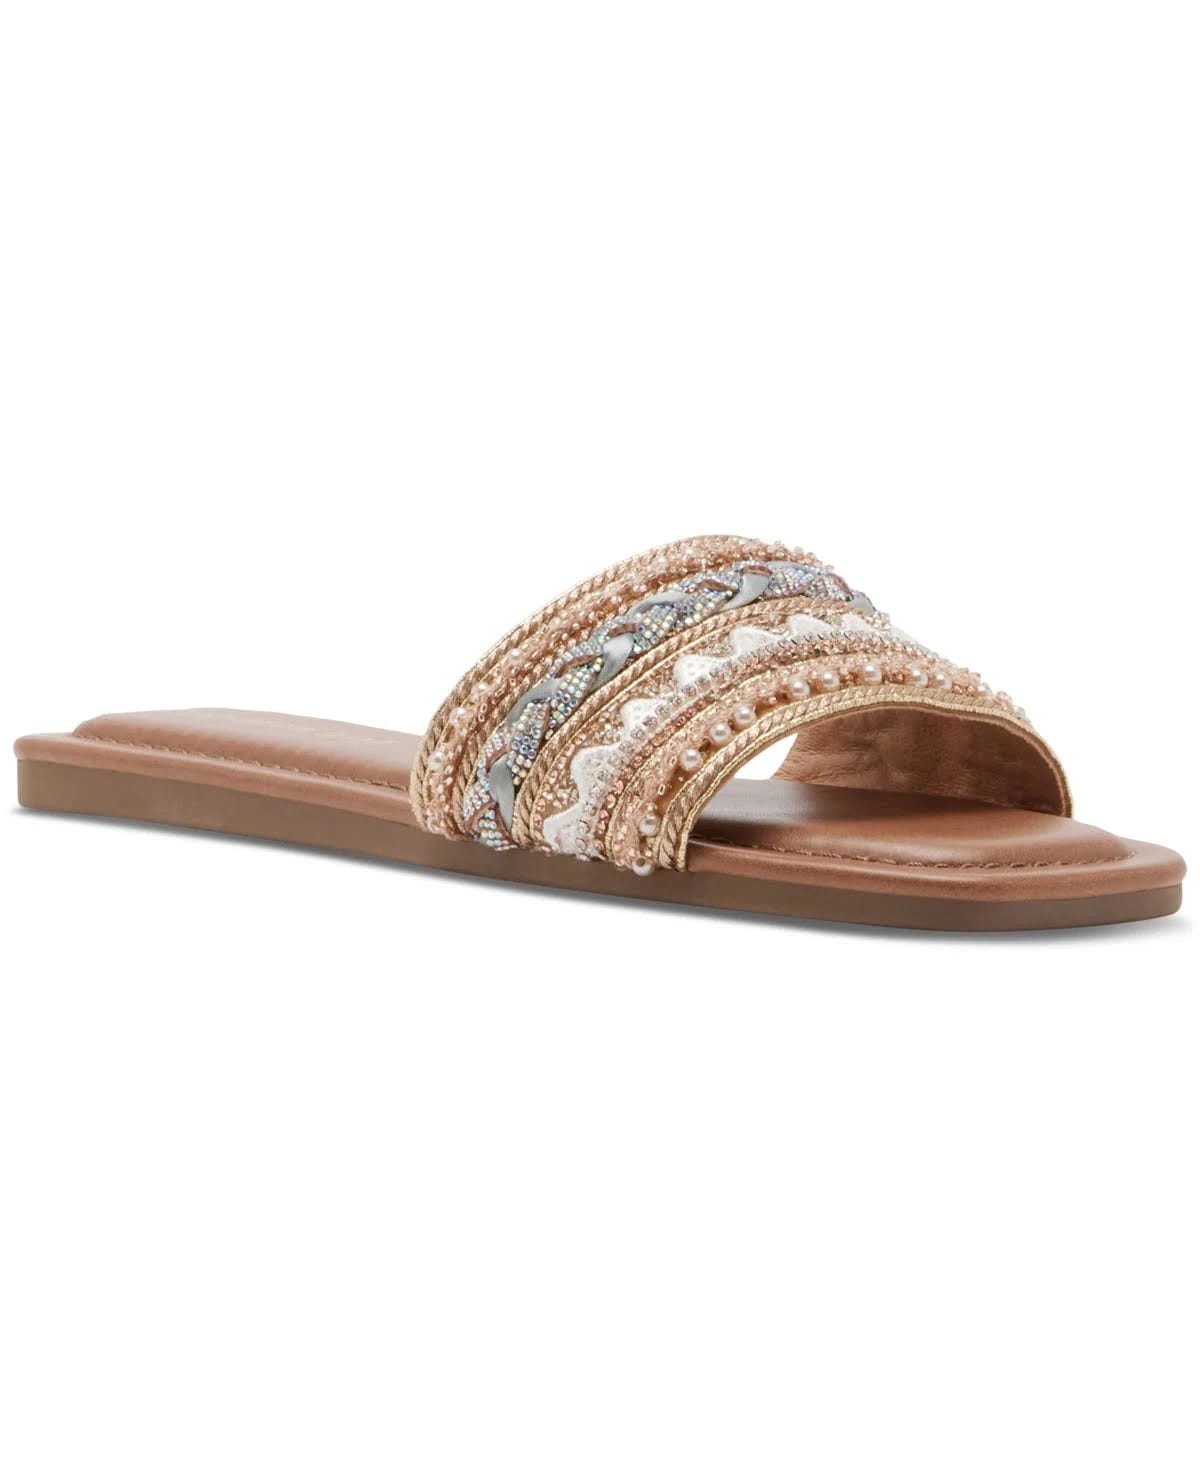 Pretty Rhinestone-Embellished Slide Sandals for Women | Image